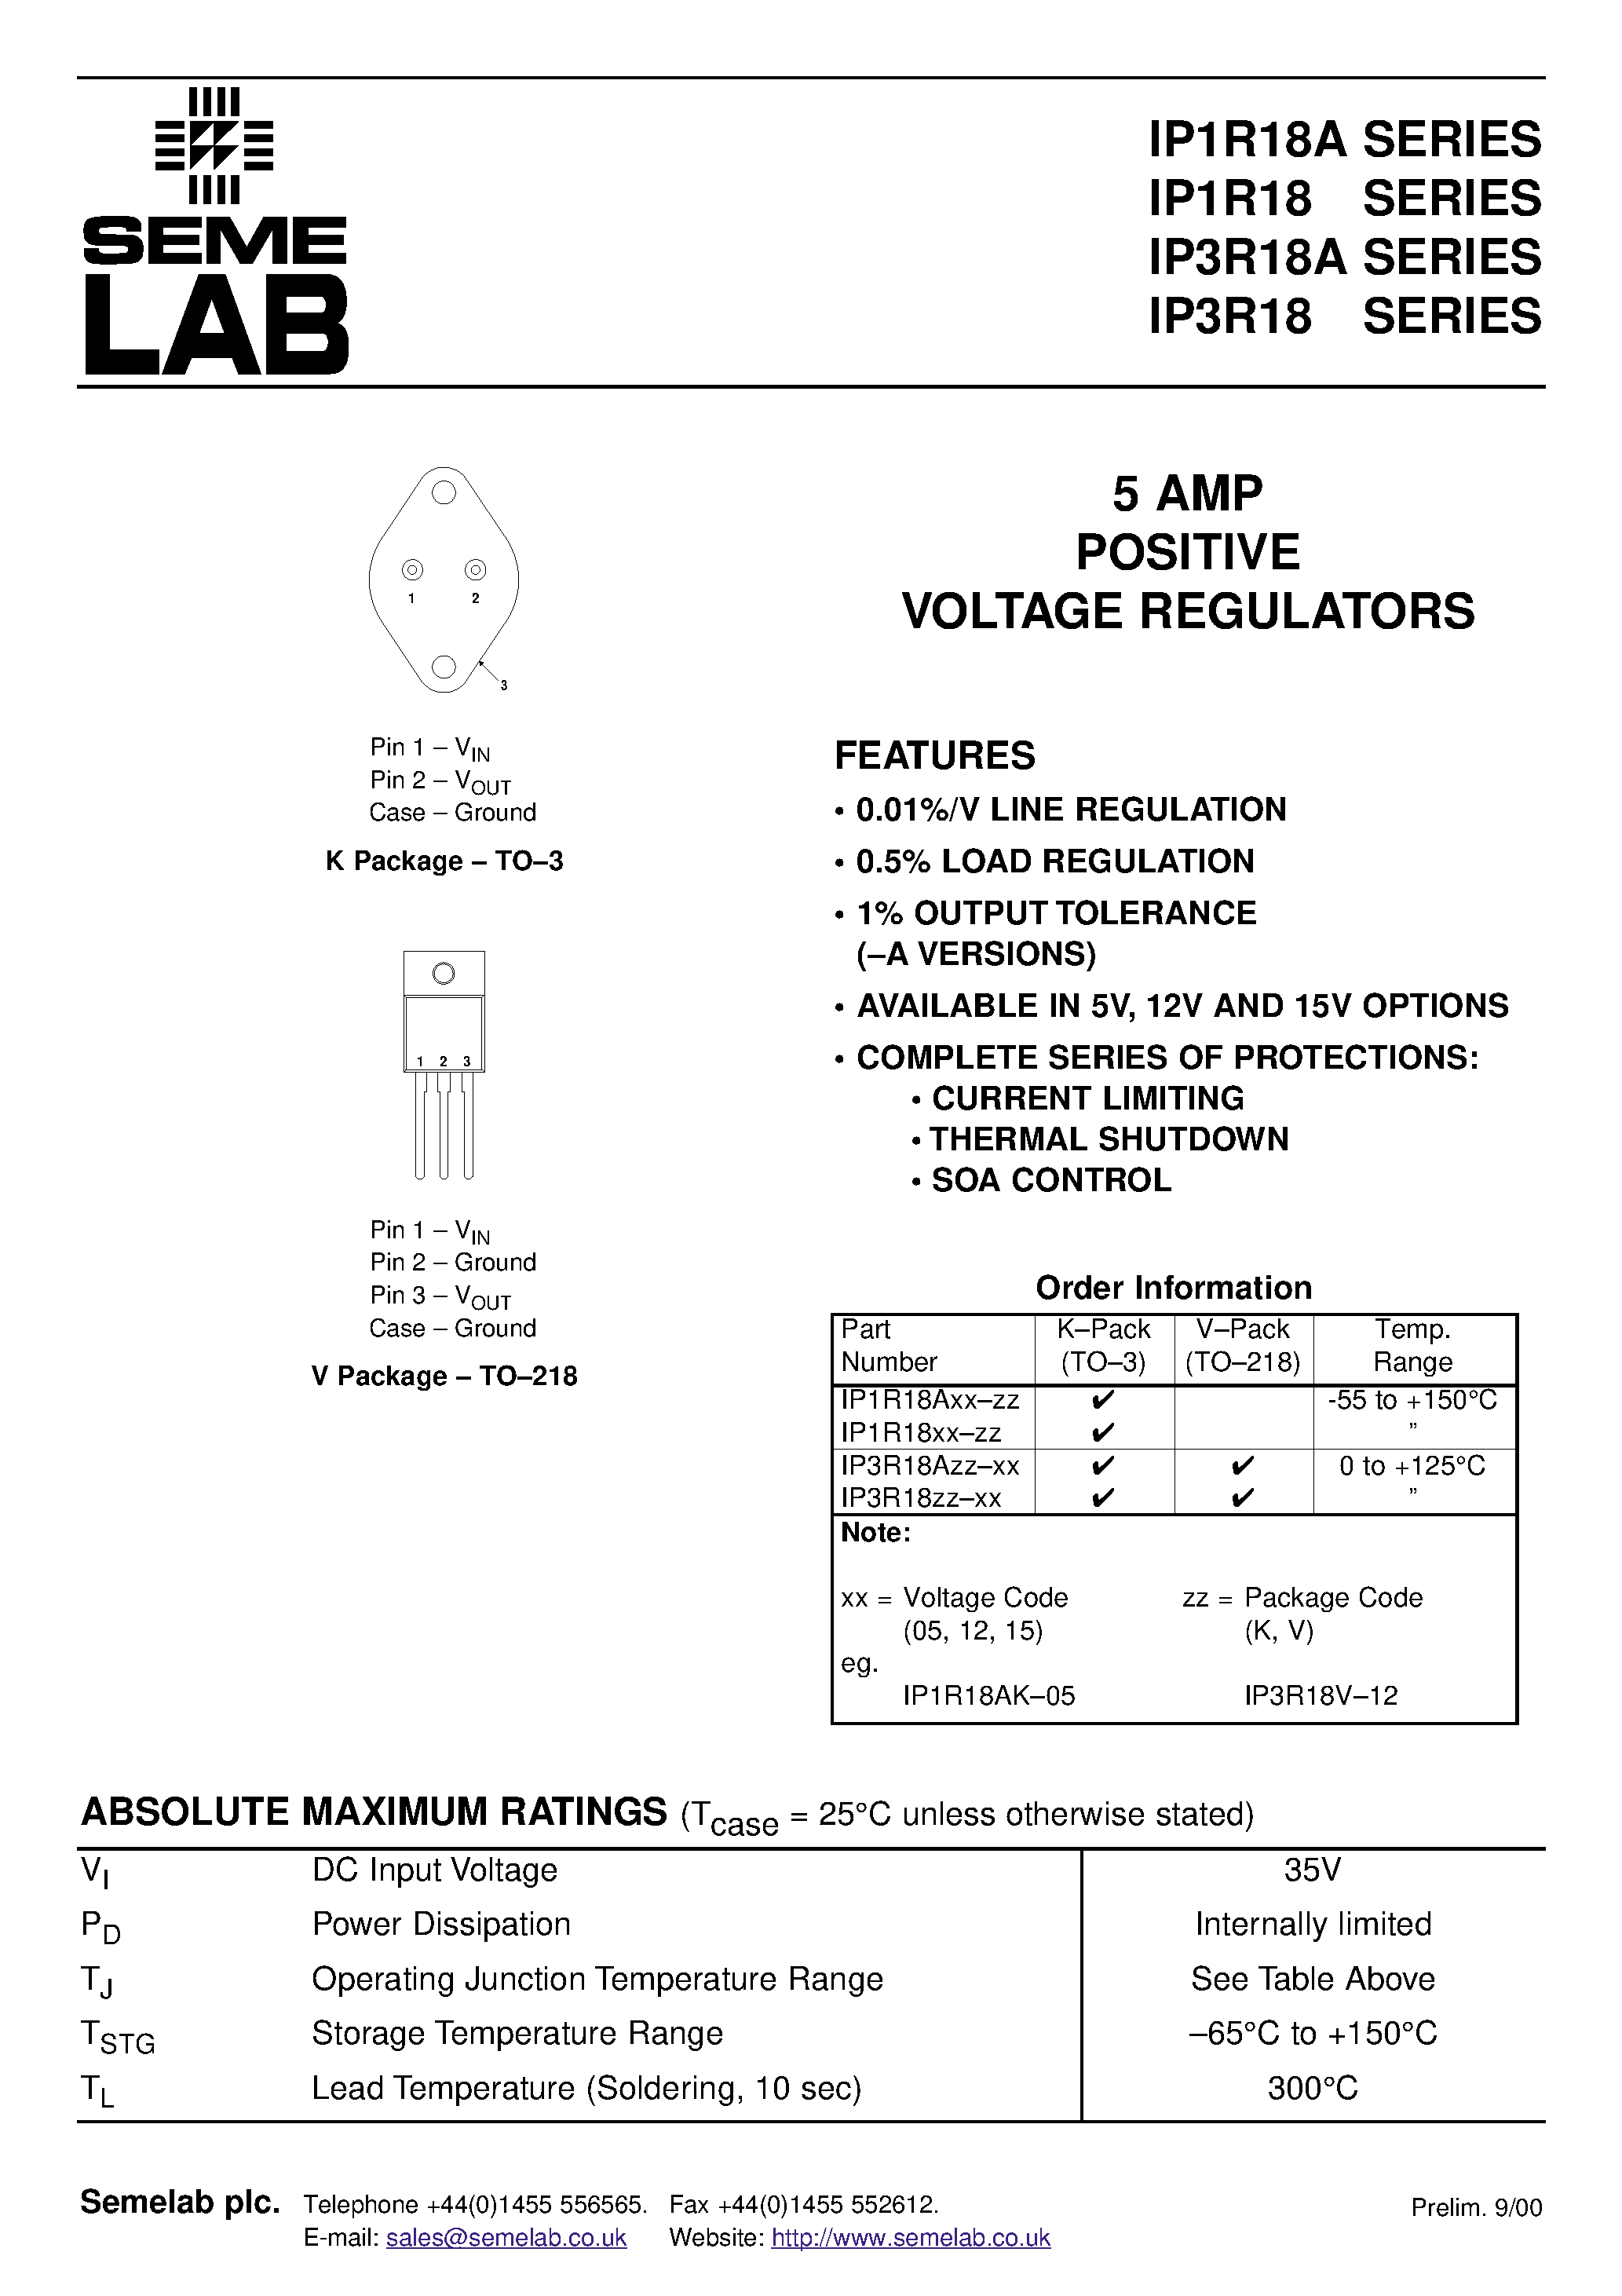 Datasheet IP1R1815-K - 5 AMP POSITIVE VOLTAGE REGULATORS page 1